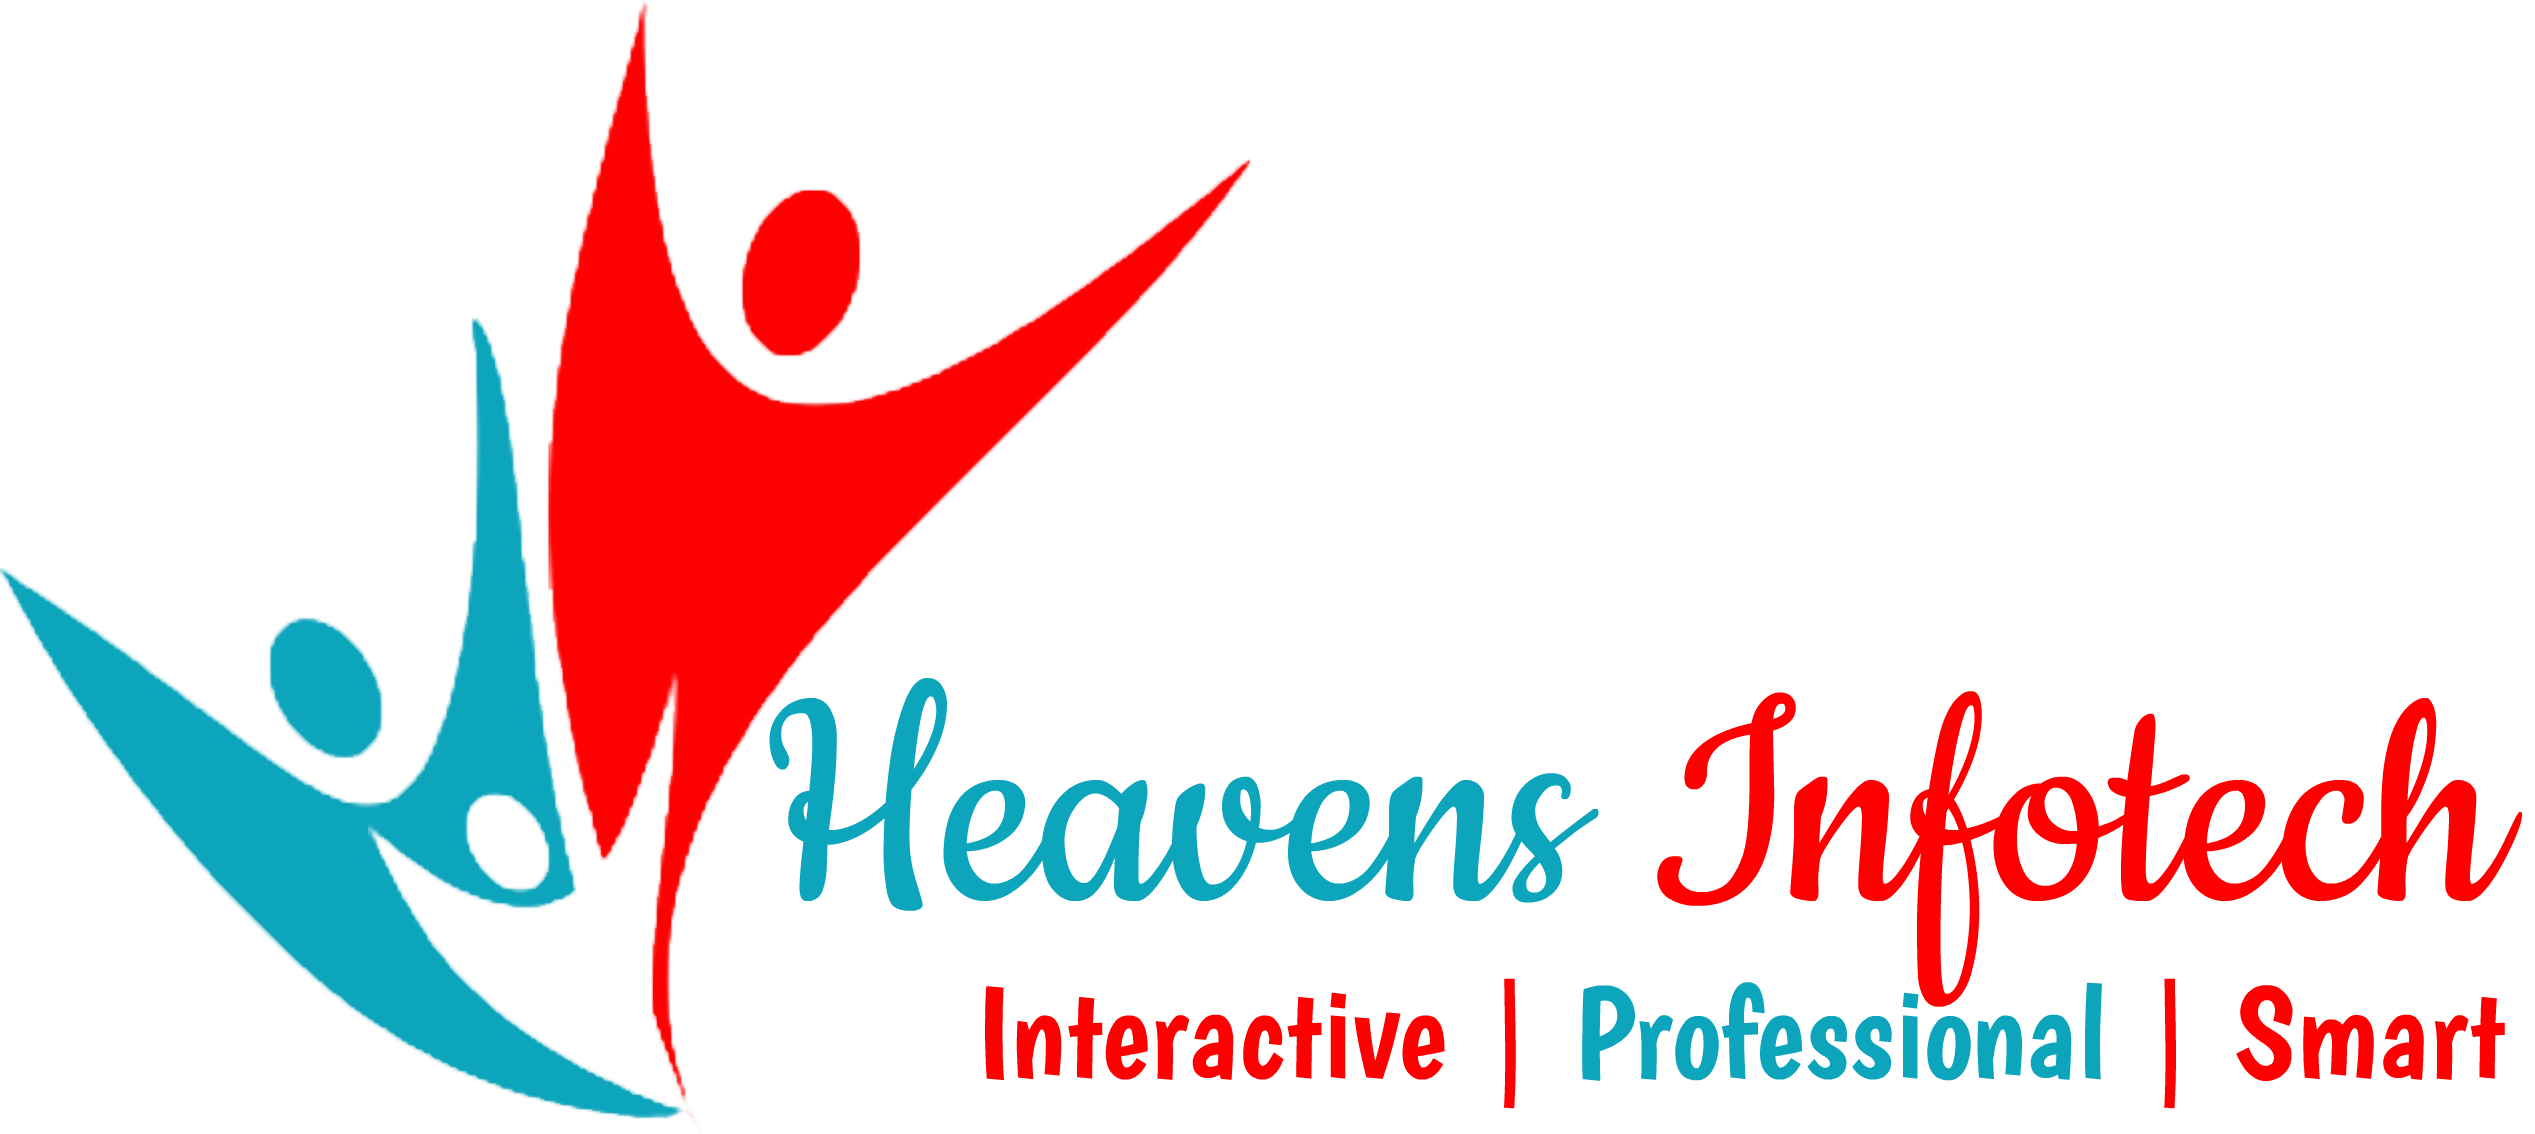 Heavens Information Technology